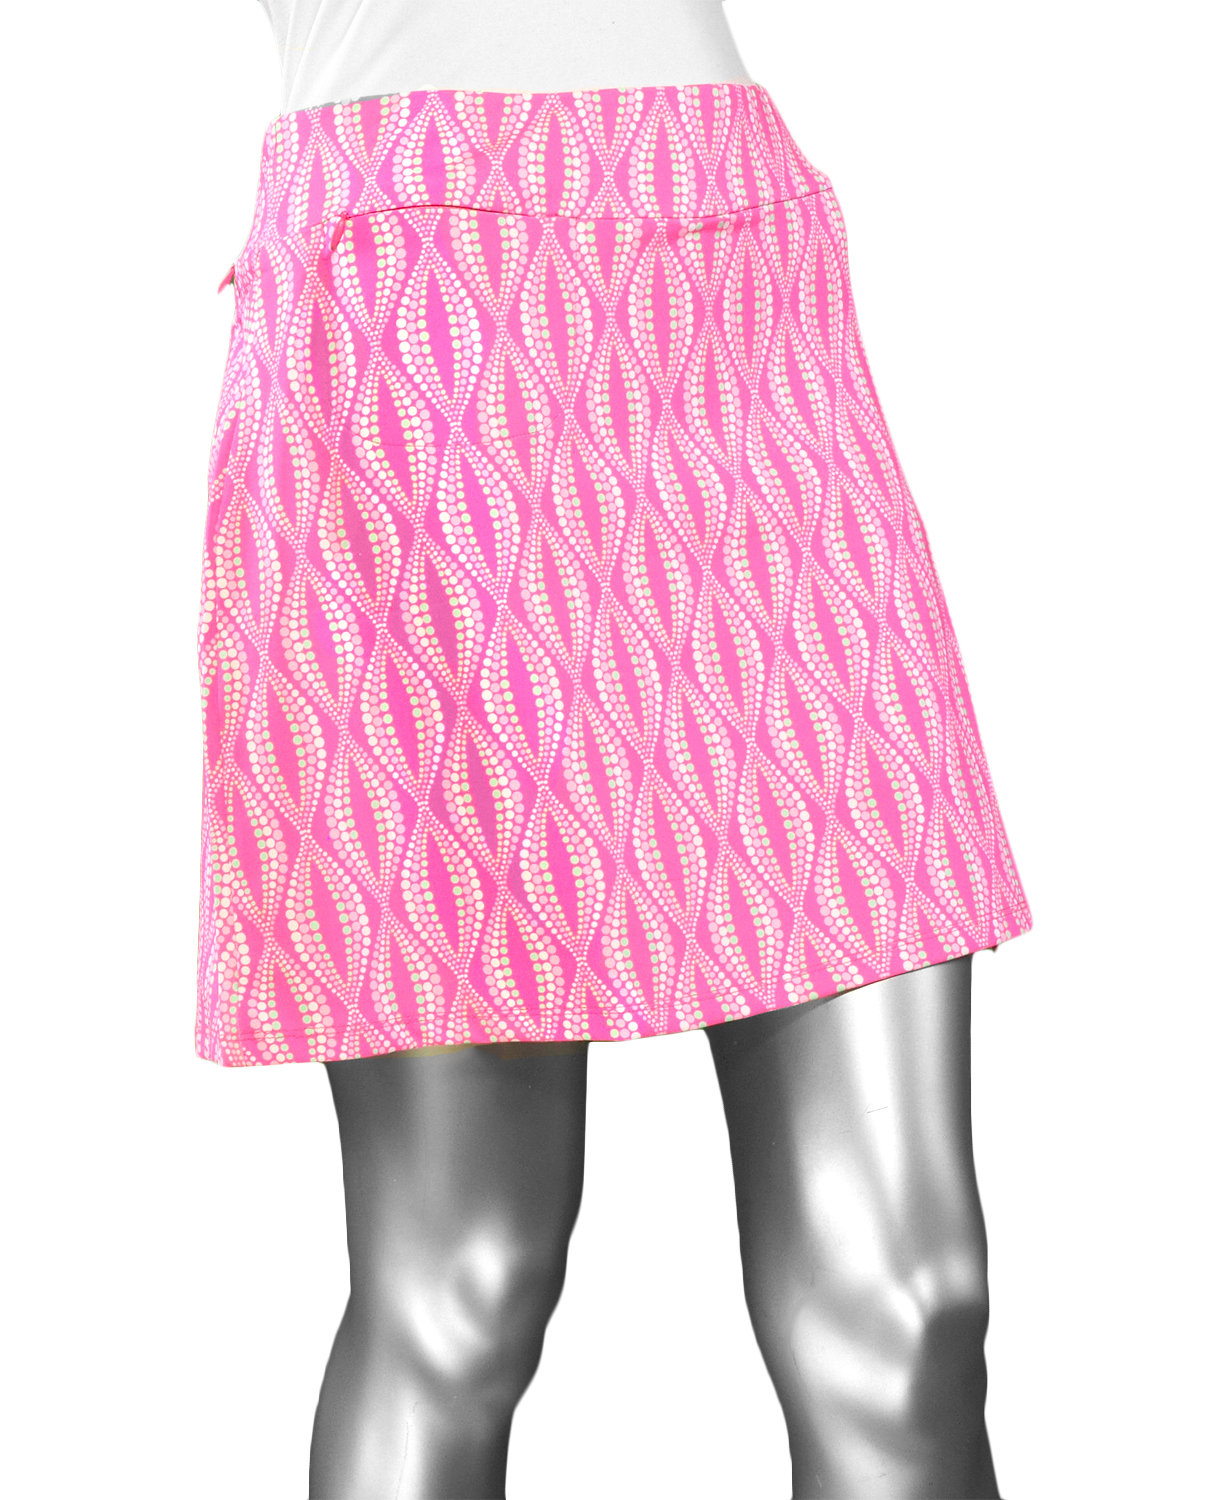 Lulu B Dress With Shorts Underneath. Women's Large.